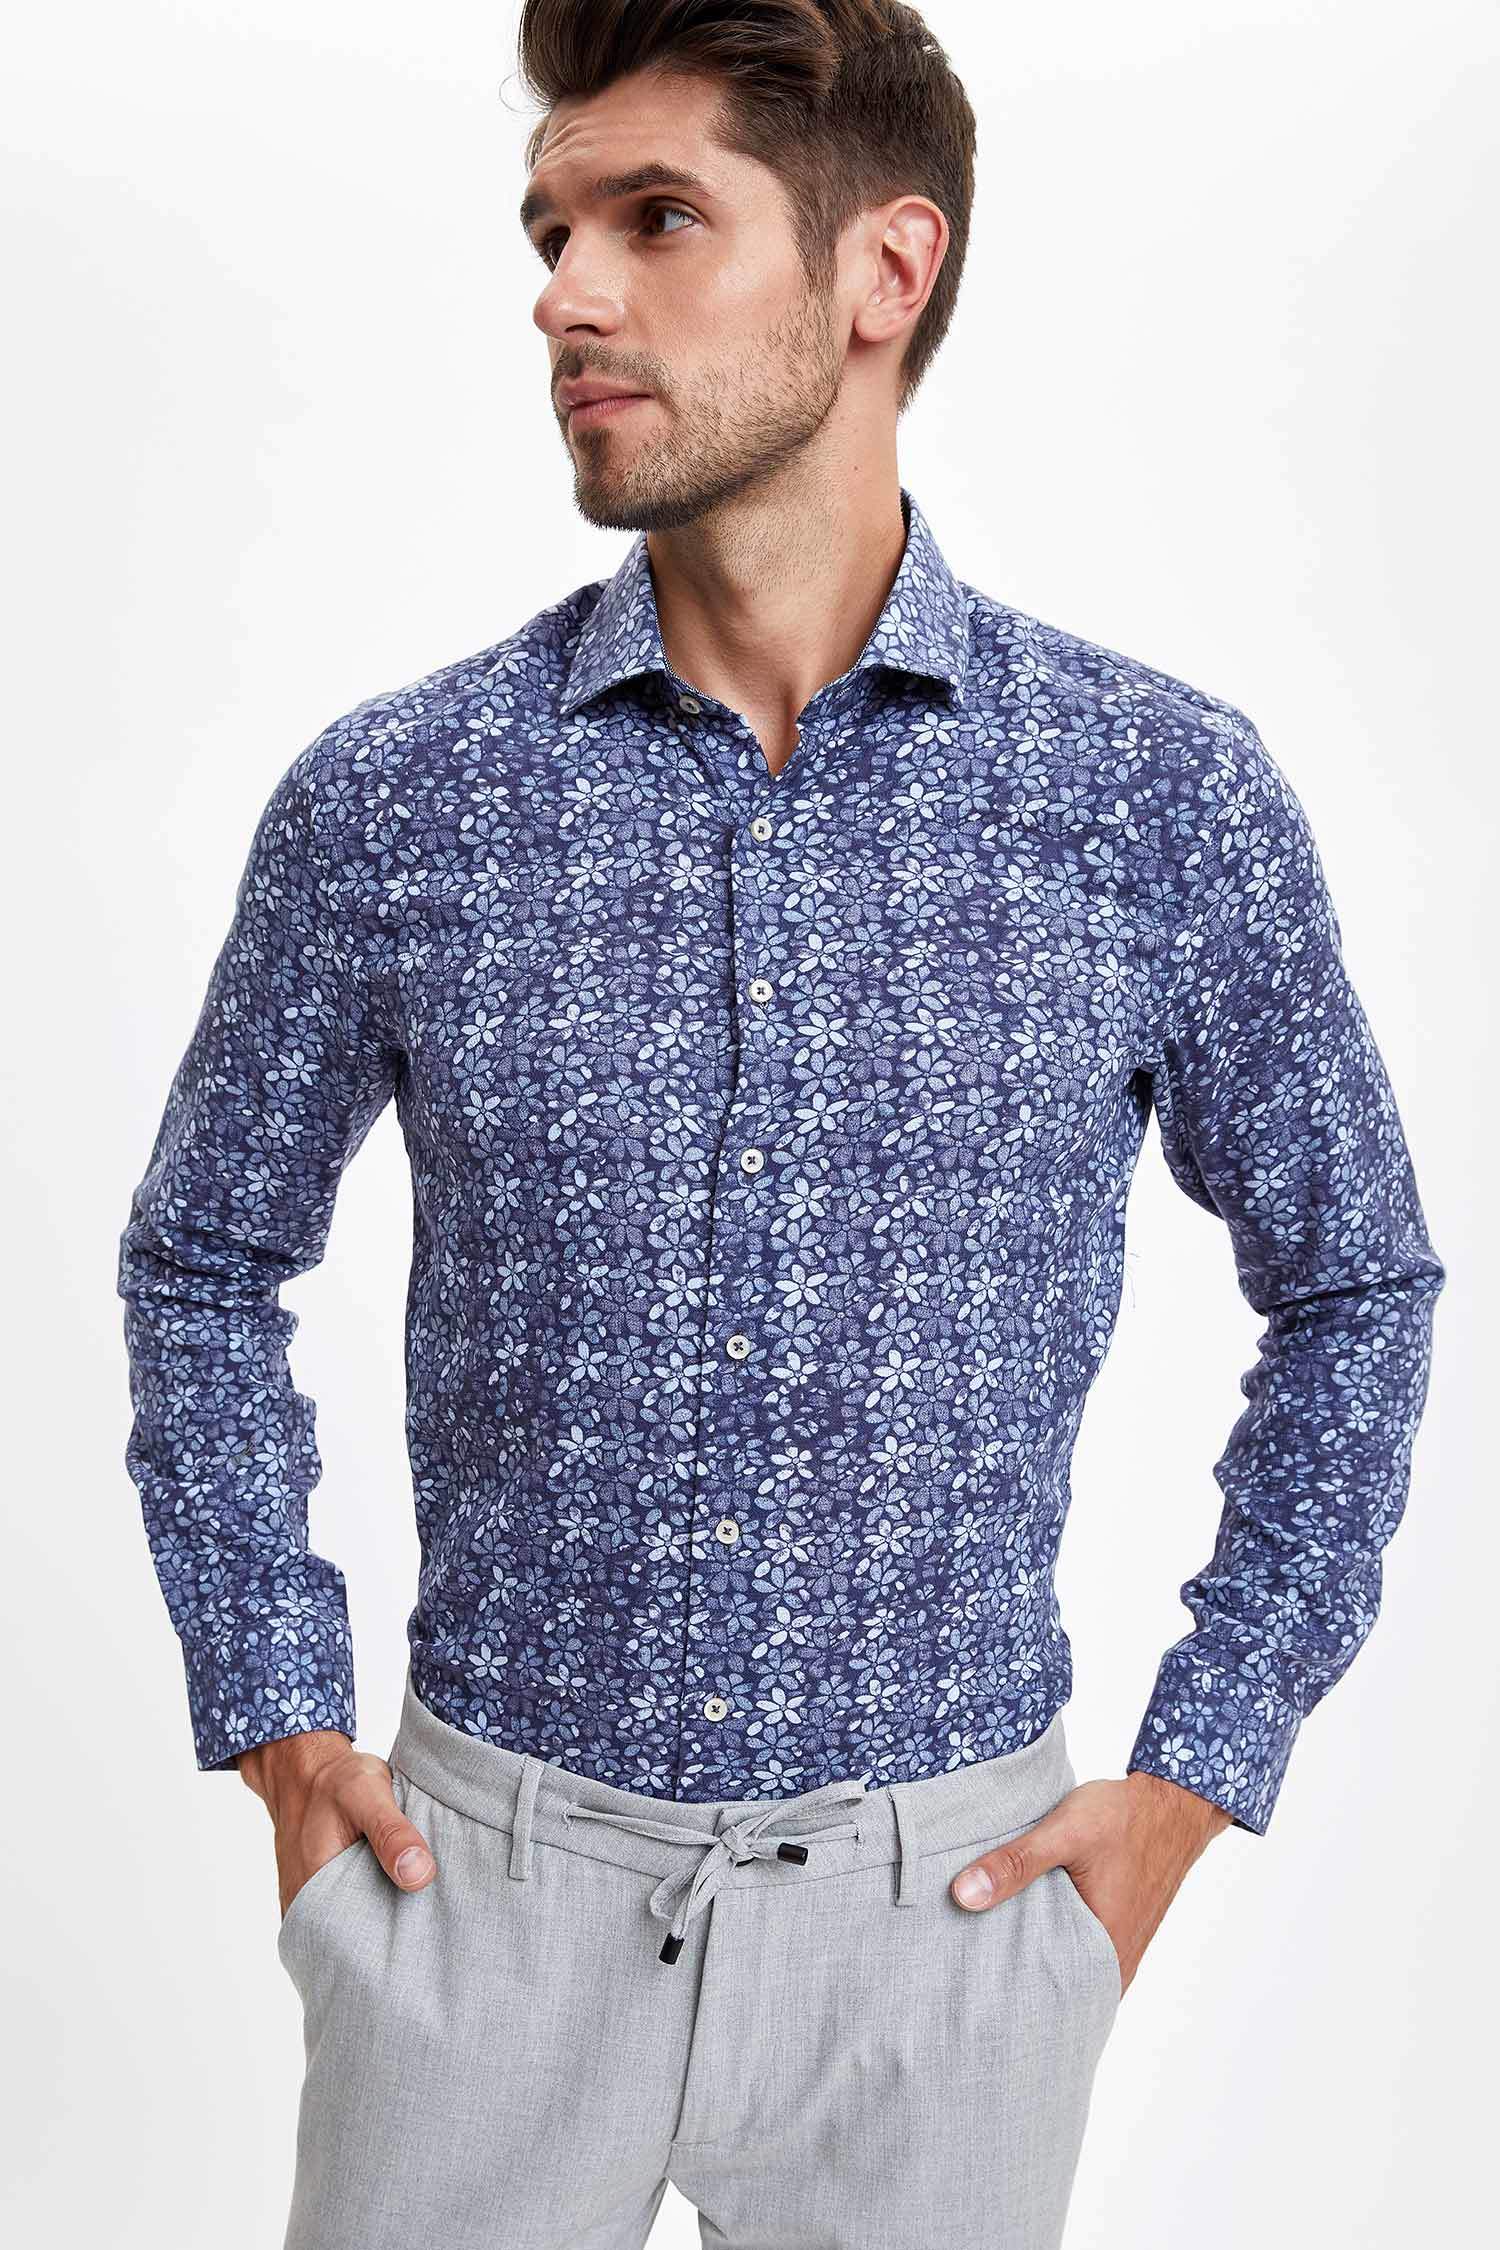 Blue MAN Slim Fit Floral Patterned Long Sleeve Shirt 1165143 | DeFacto